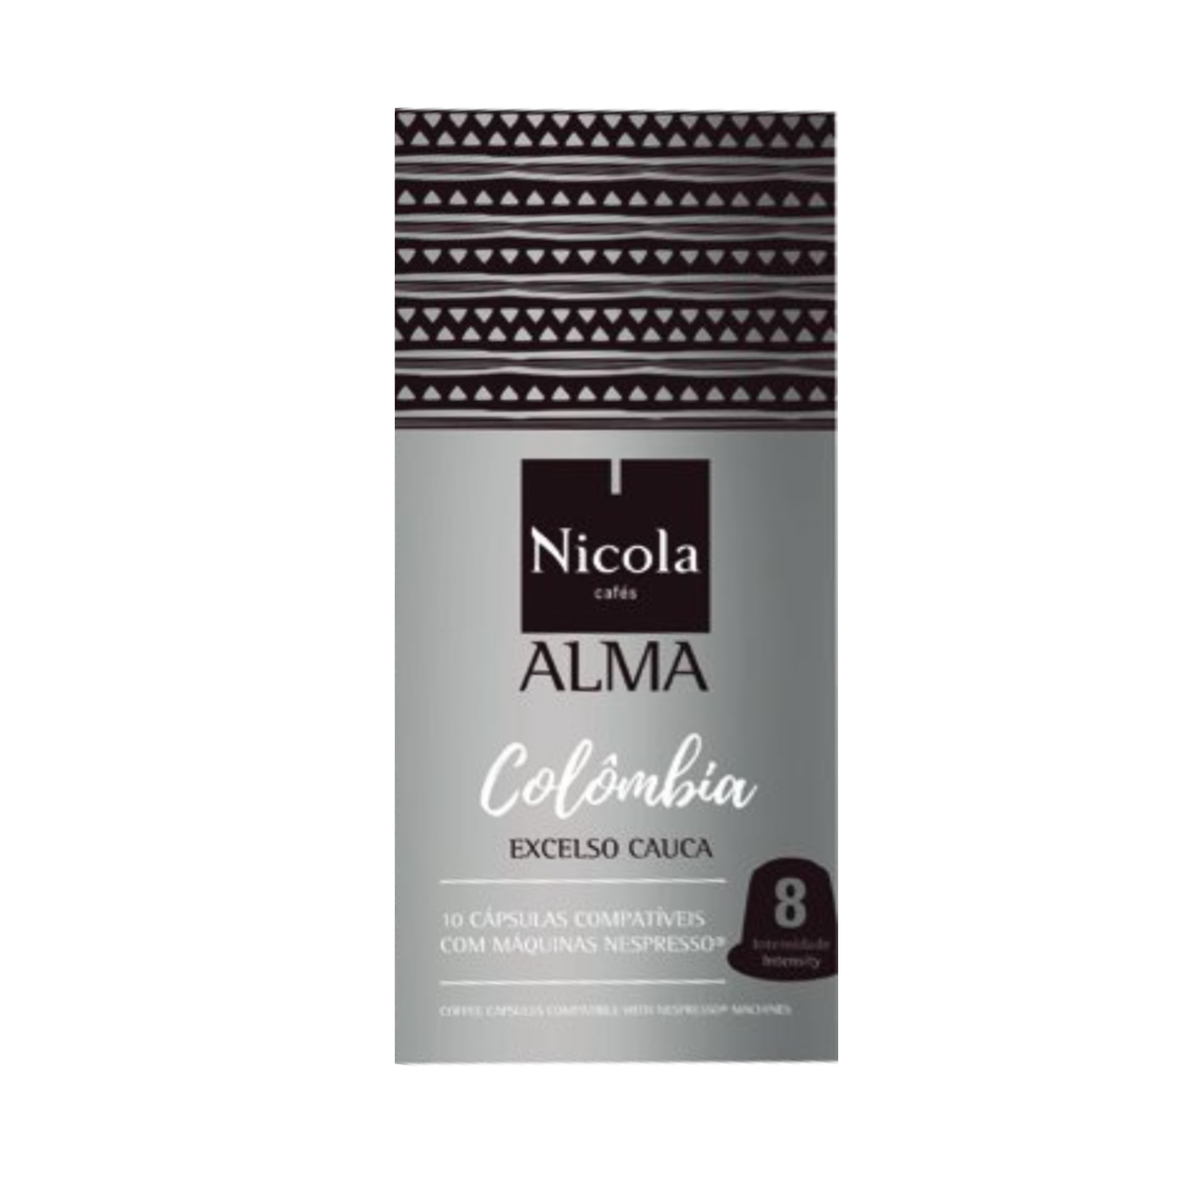 Nicola Alma Colombia Coffee 50 g